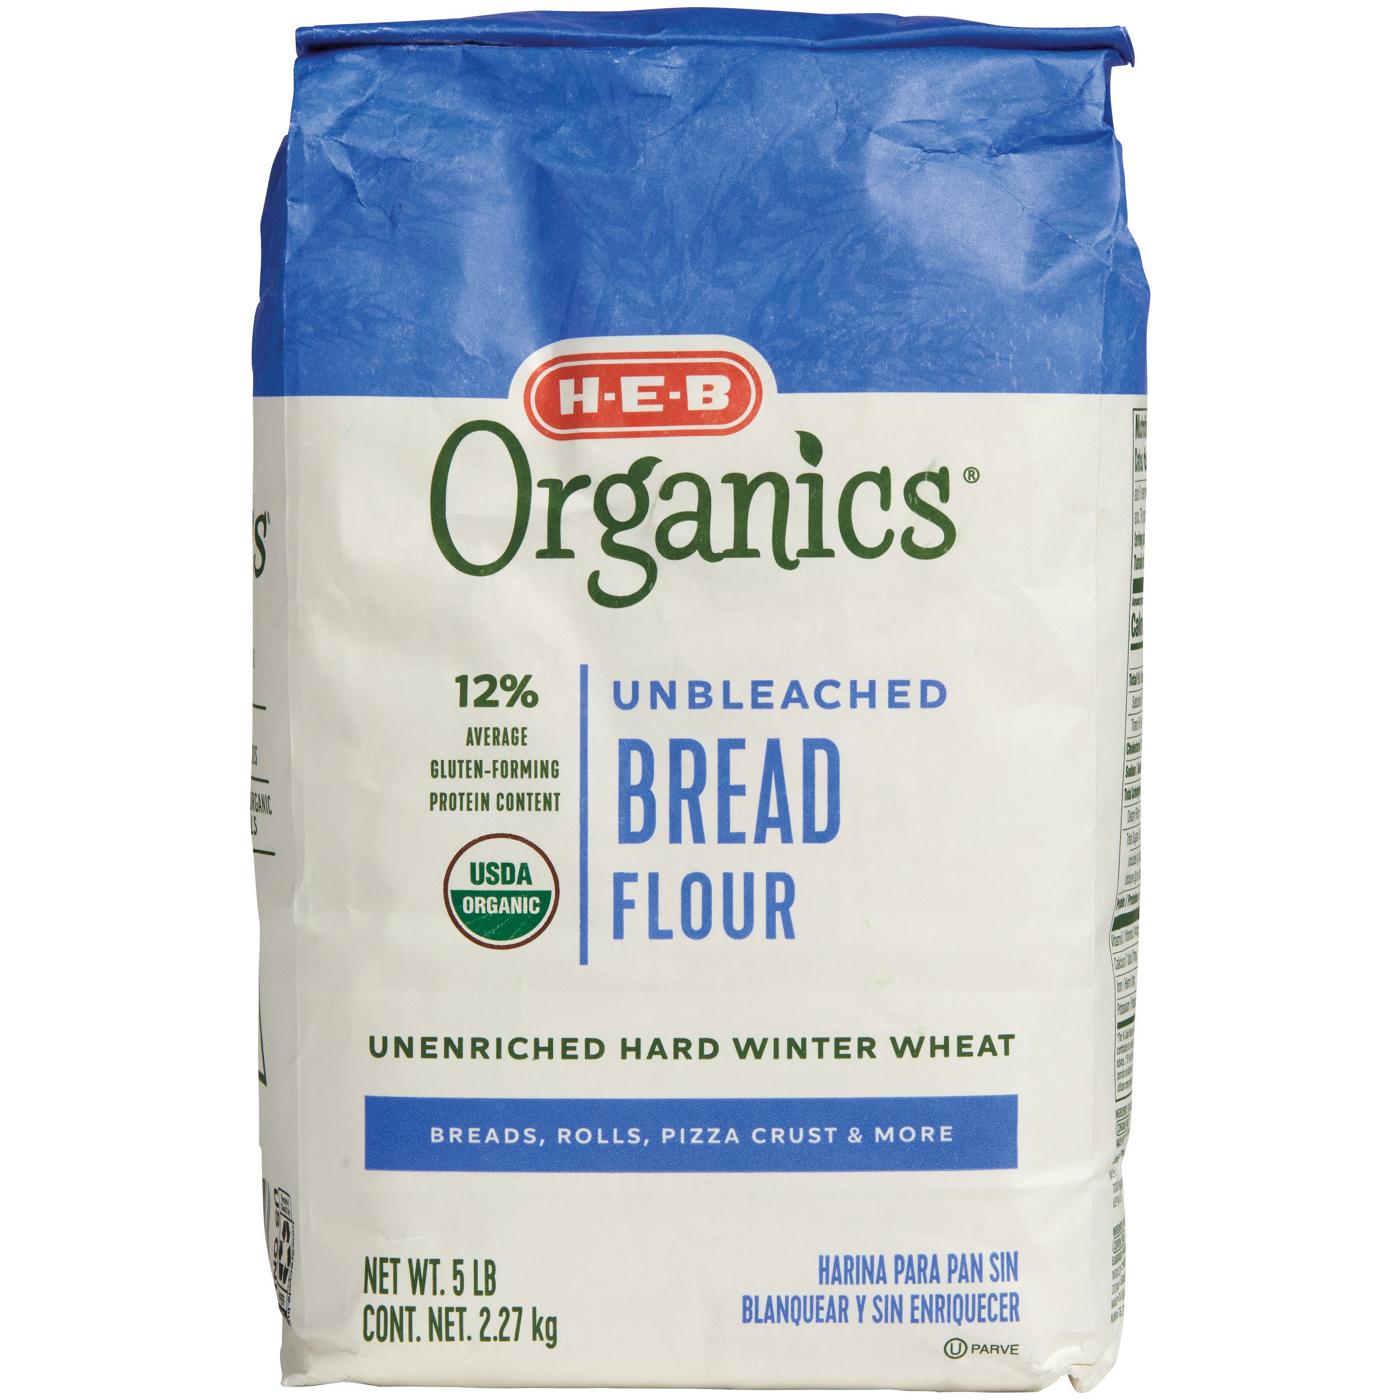 H-E-B Organics Unbleached Bread Flour; image 1 of 2